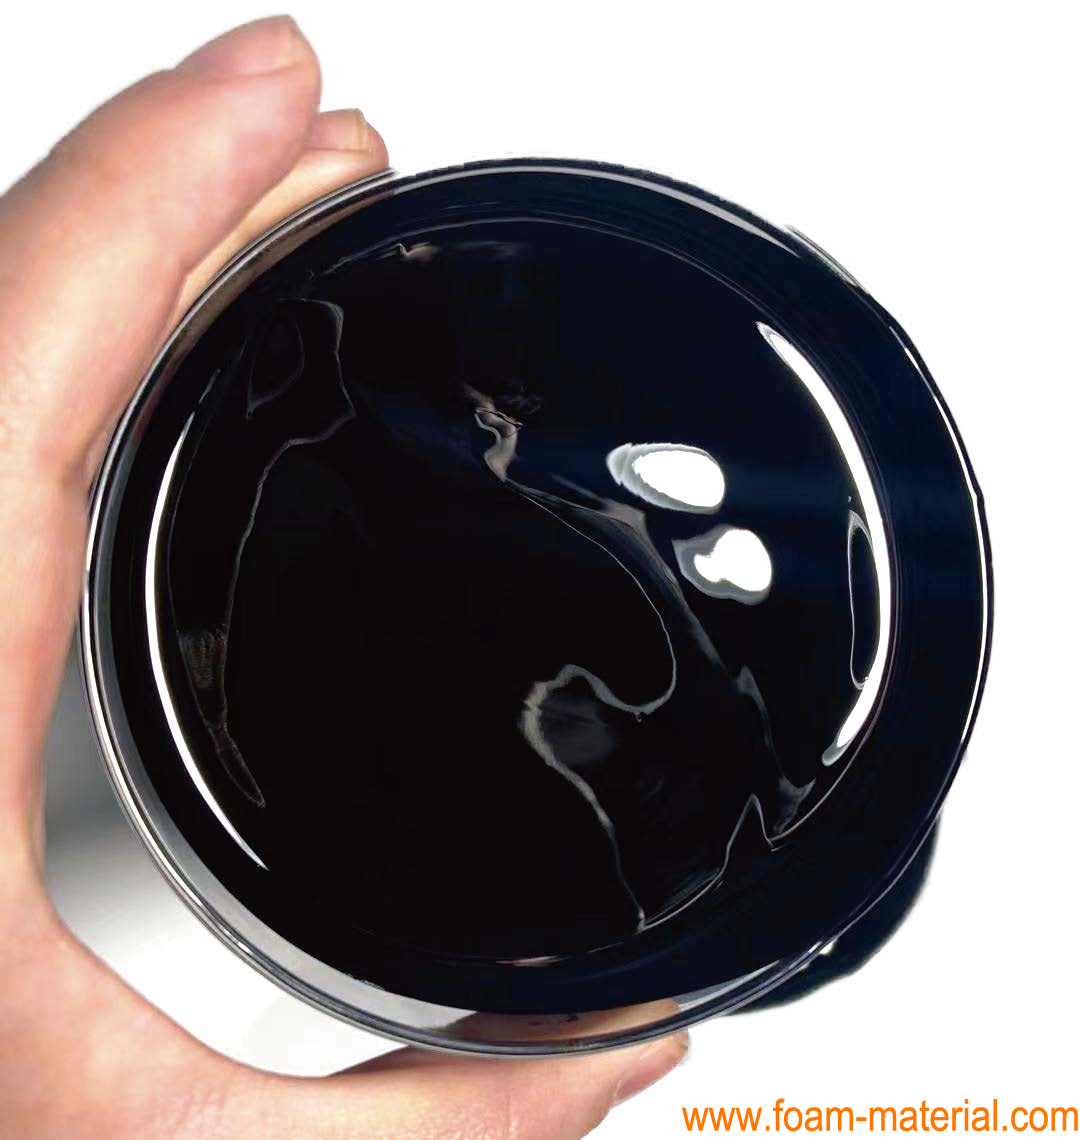 Oil based carbon fiber paste